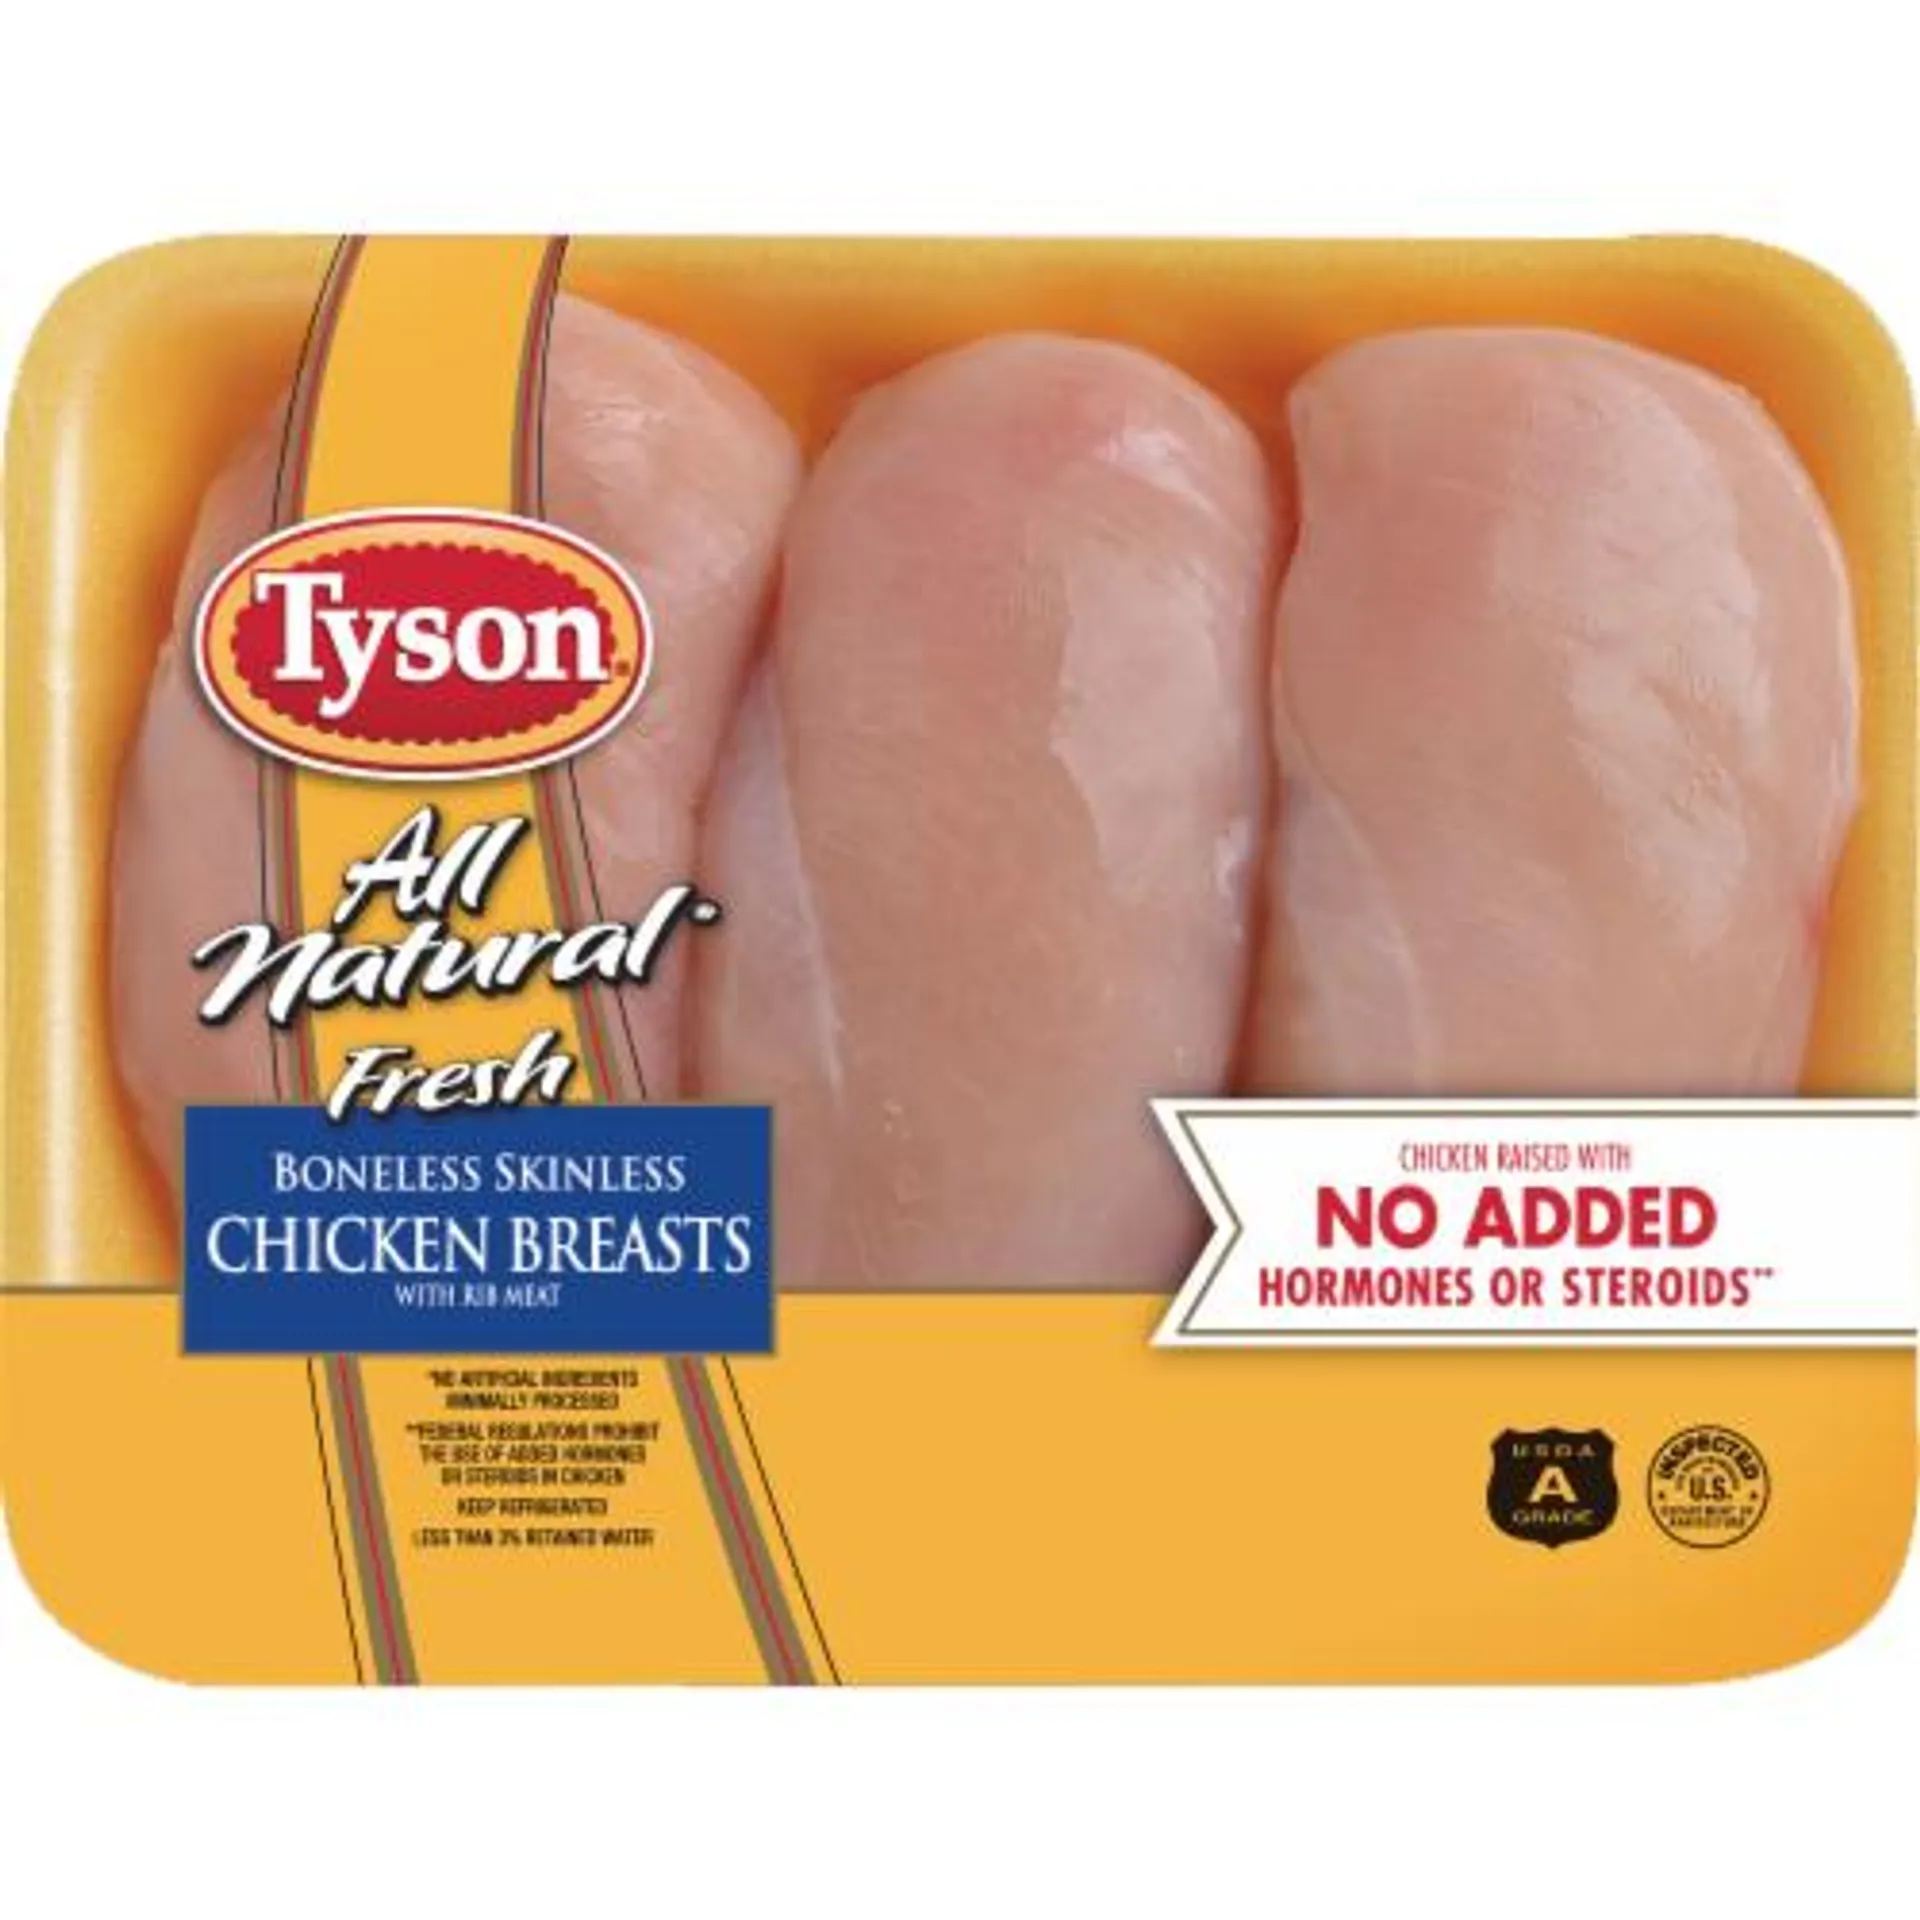 Tyson All Natural Fresh Boneless Skinless Chicken Breasts